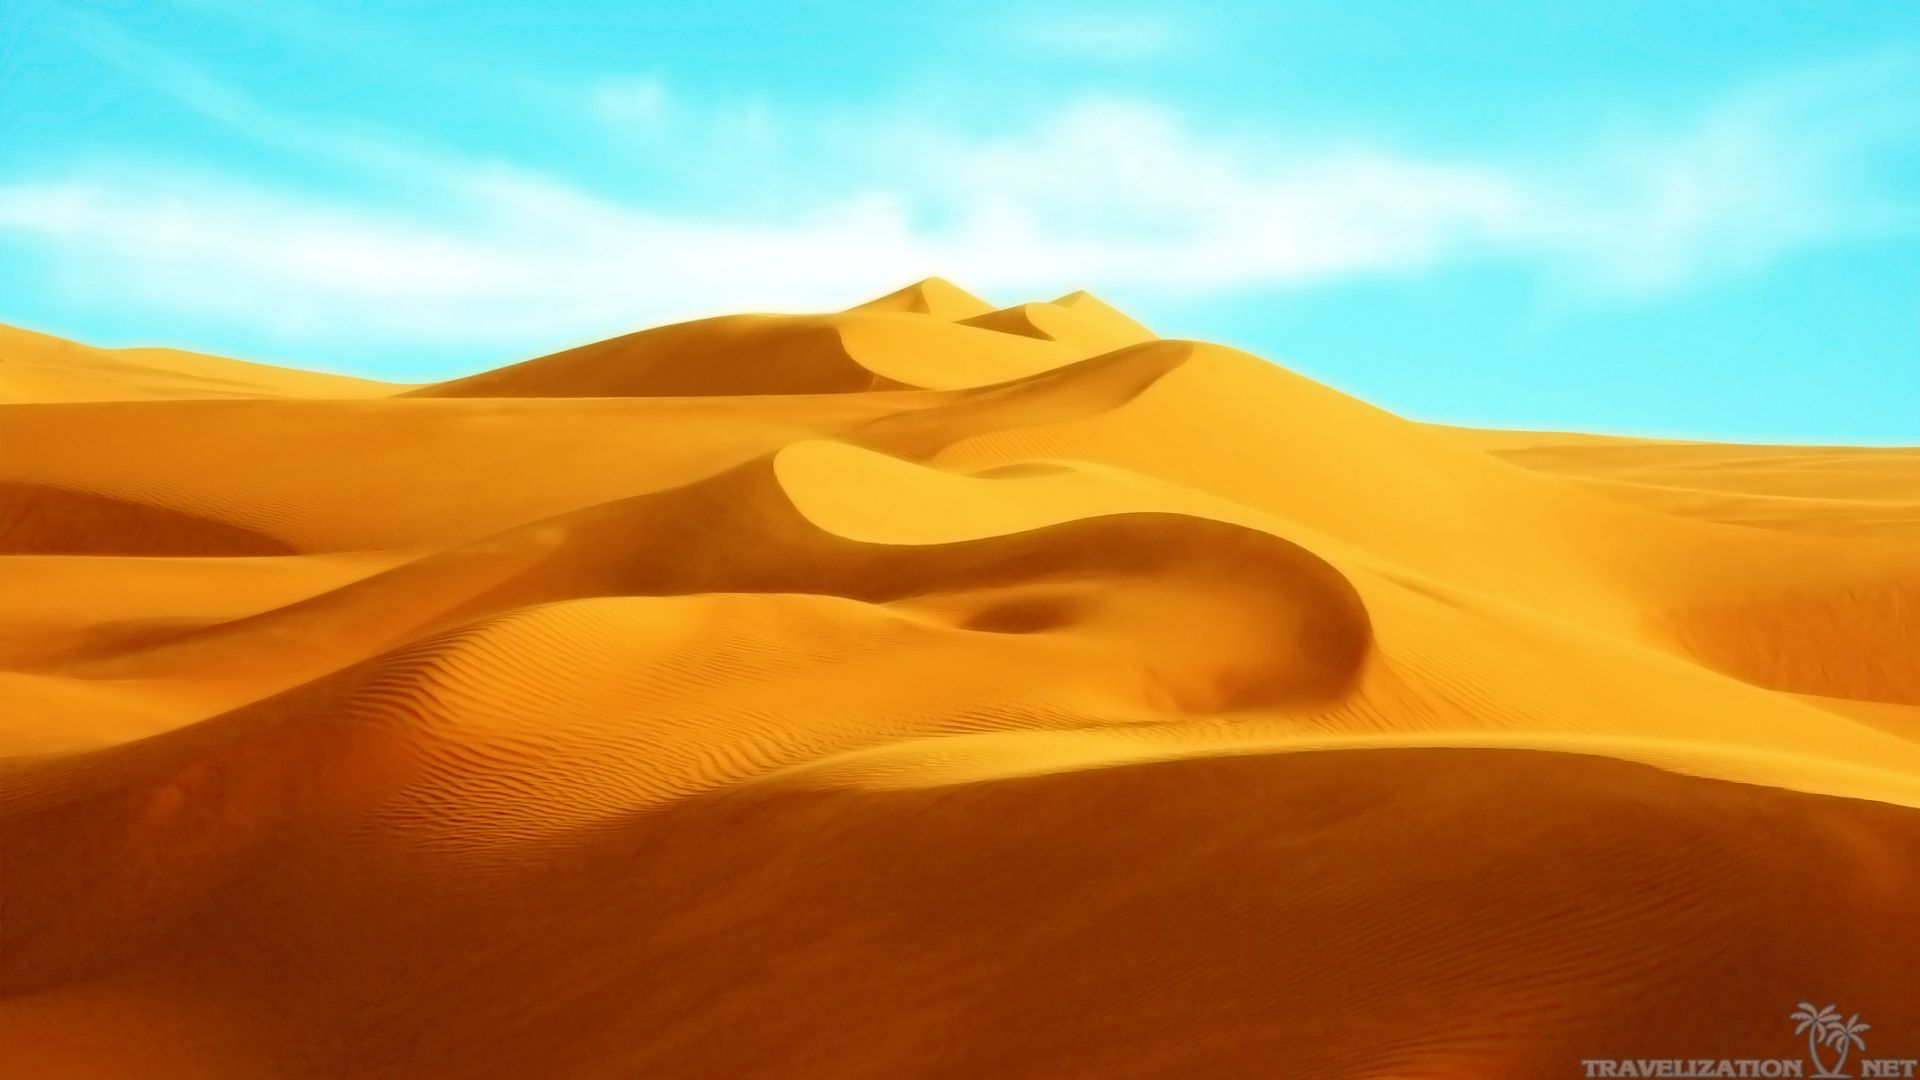 Sahara Desert wallpaper 1920x1080 79798